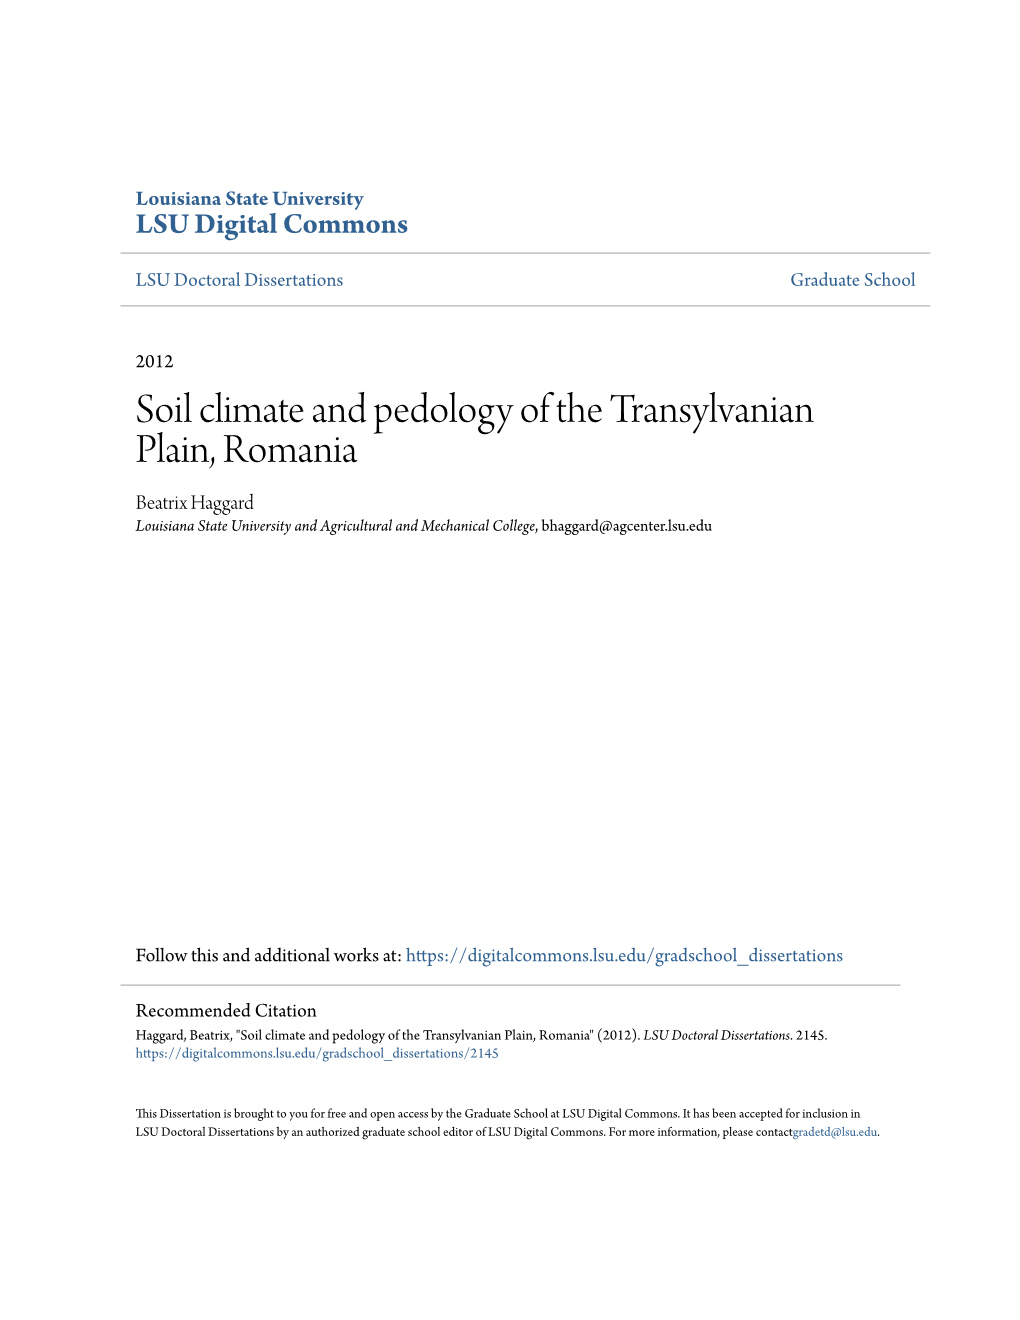 Soil Climate and Pedology of the Transylvanian Plain, Romania